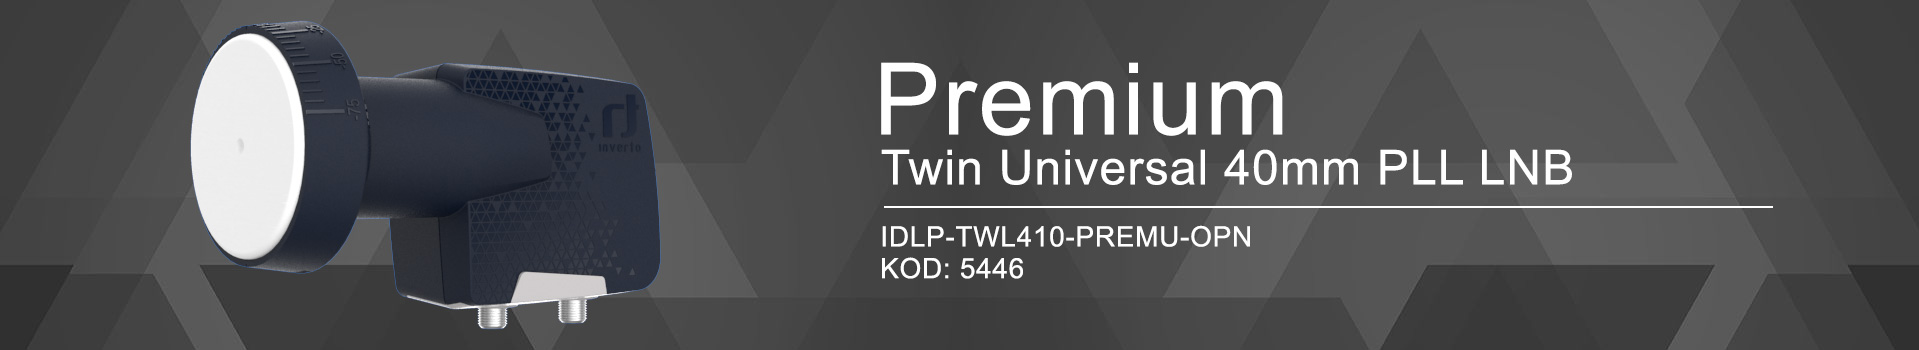 konwerter satelitarny Inverto Twin Premium IDLP-TWL410-PREMU-OPN